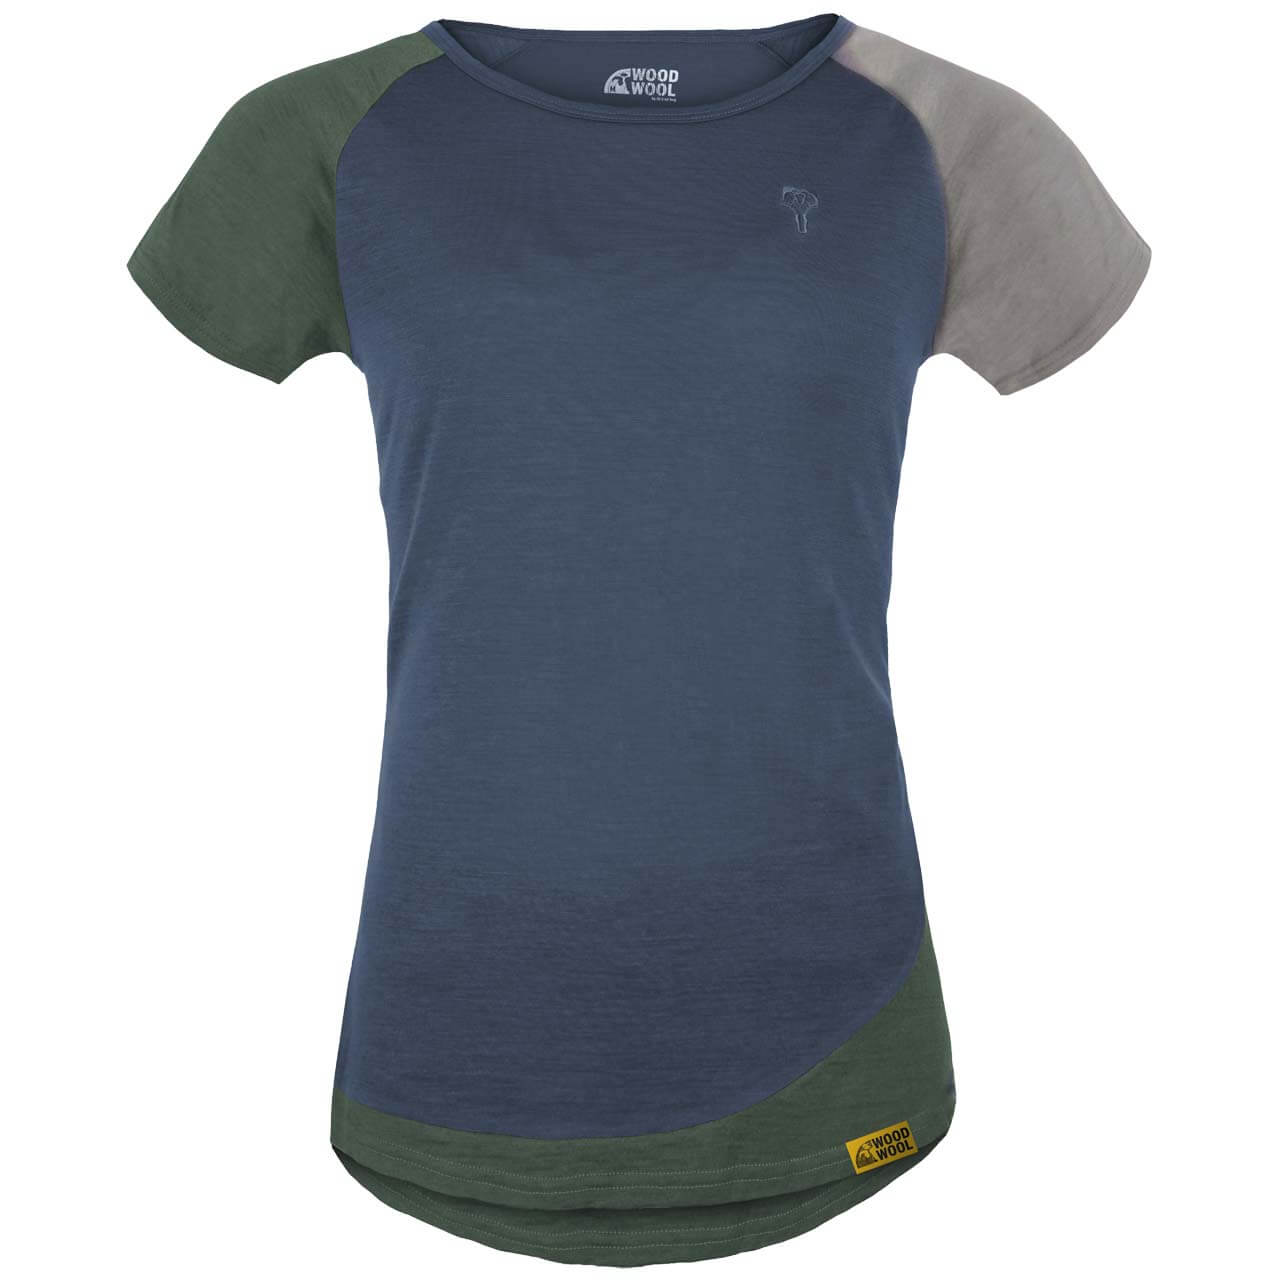 Grüezi Bag WoodWool Janeway T-Shirt - Ocean Cavern, S von Grüezi Bag}